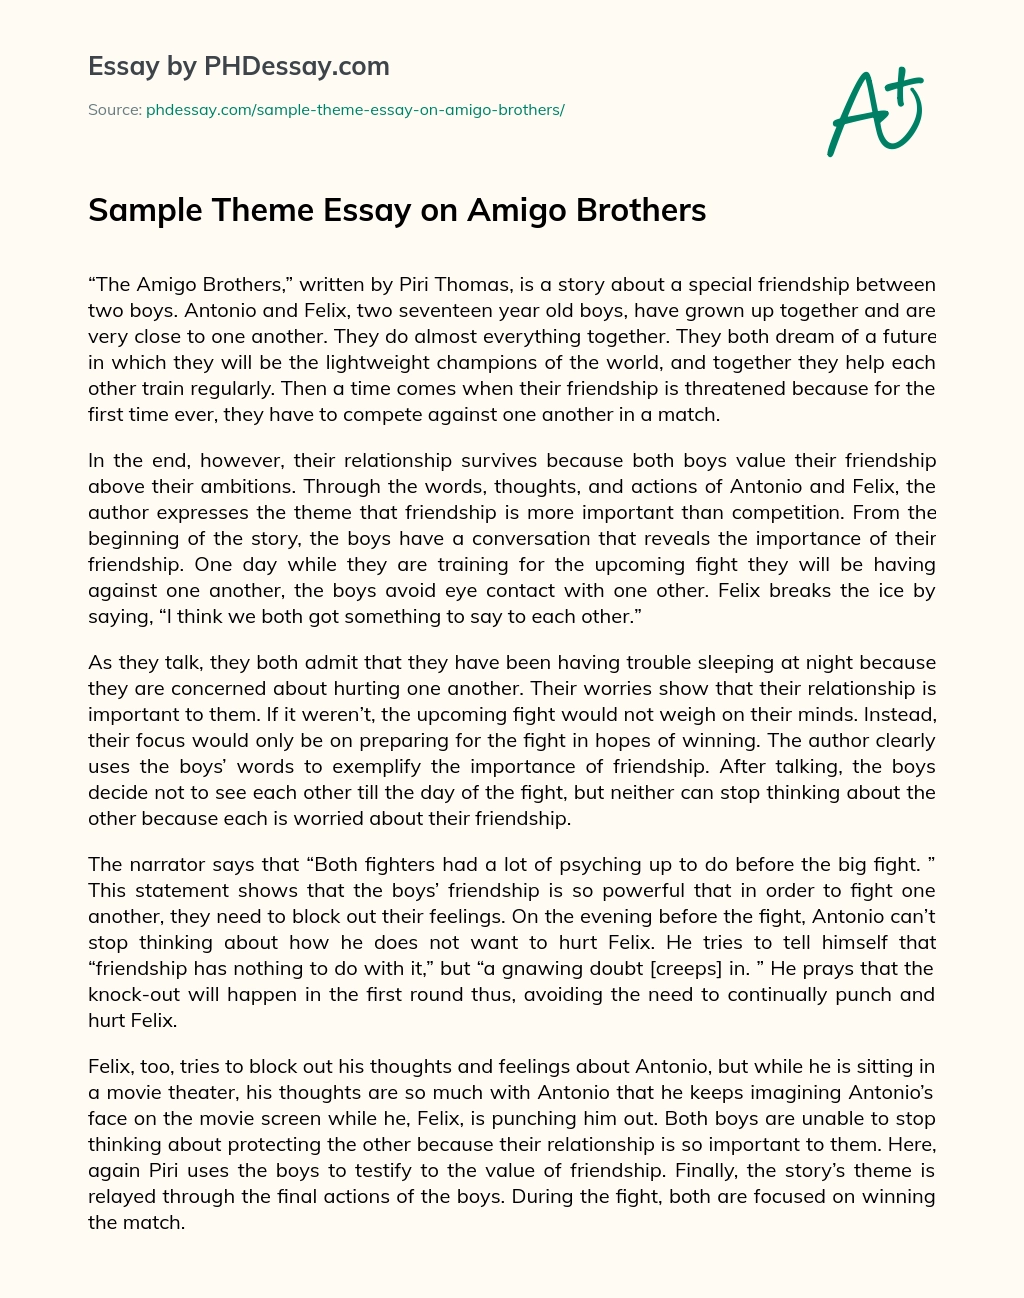 Sample Theme Essay on Amigo Brothers - PHDessay.com